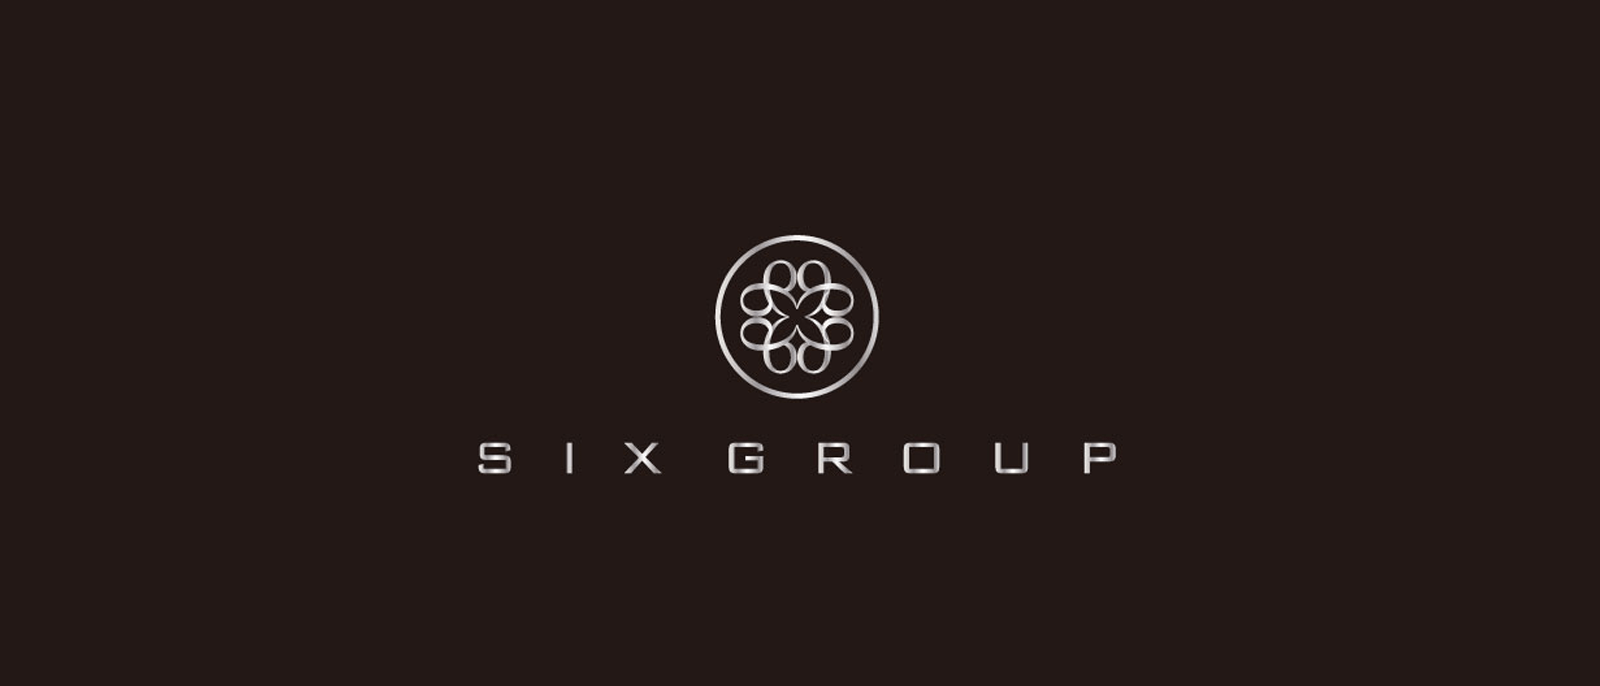 SIX GROUP